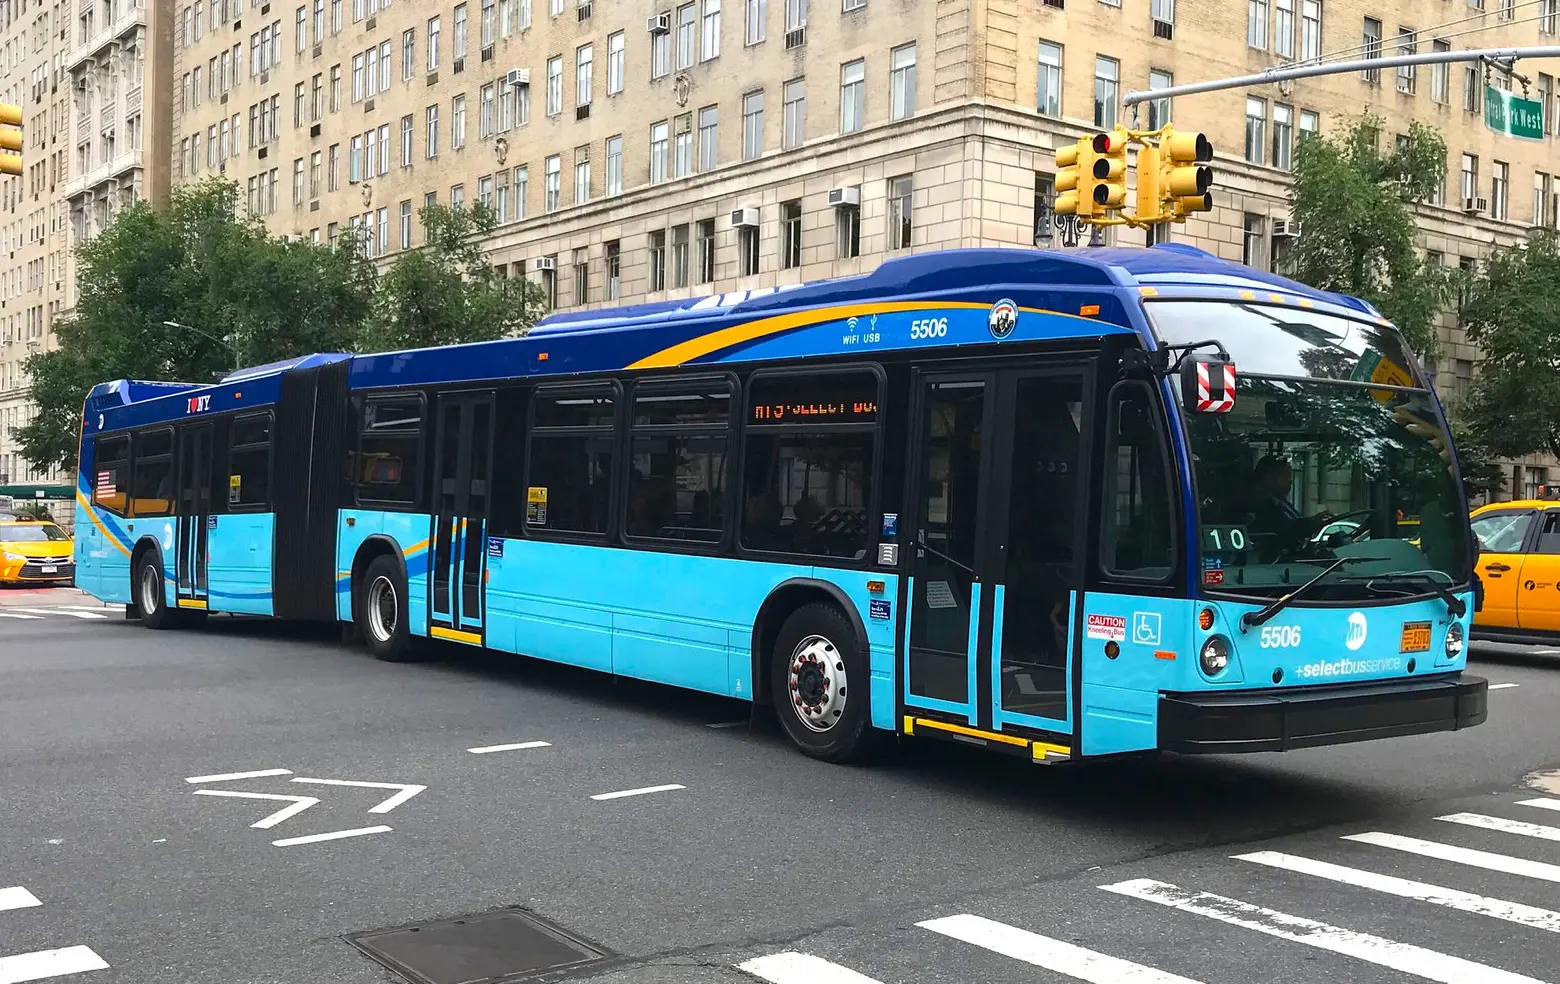 De Blasio promises to increase NYC bus speeds and number of designated lanes